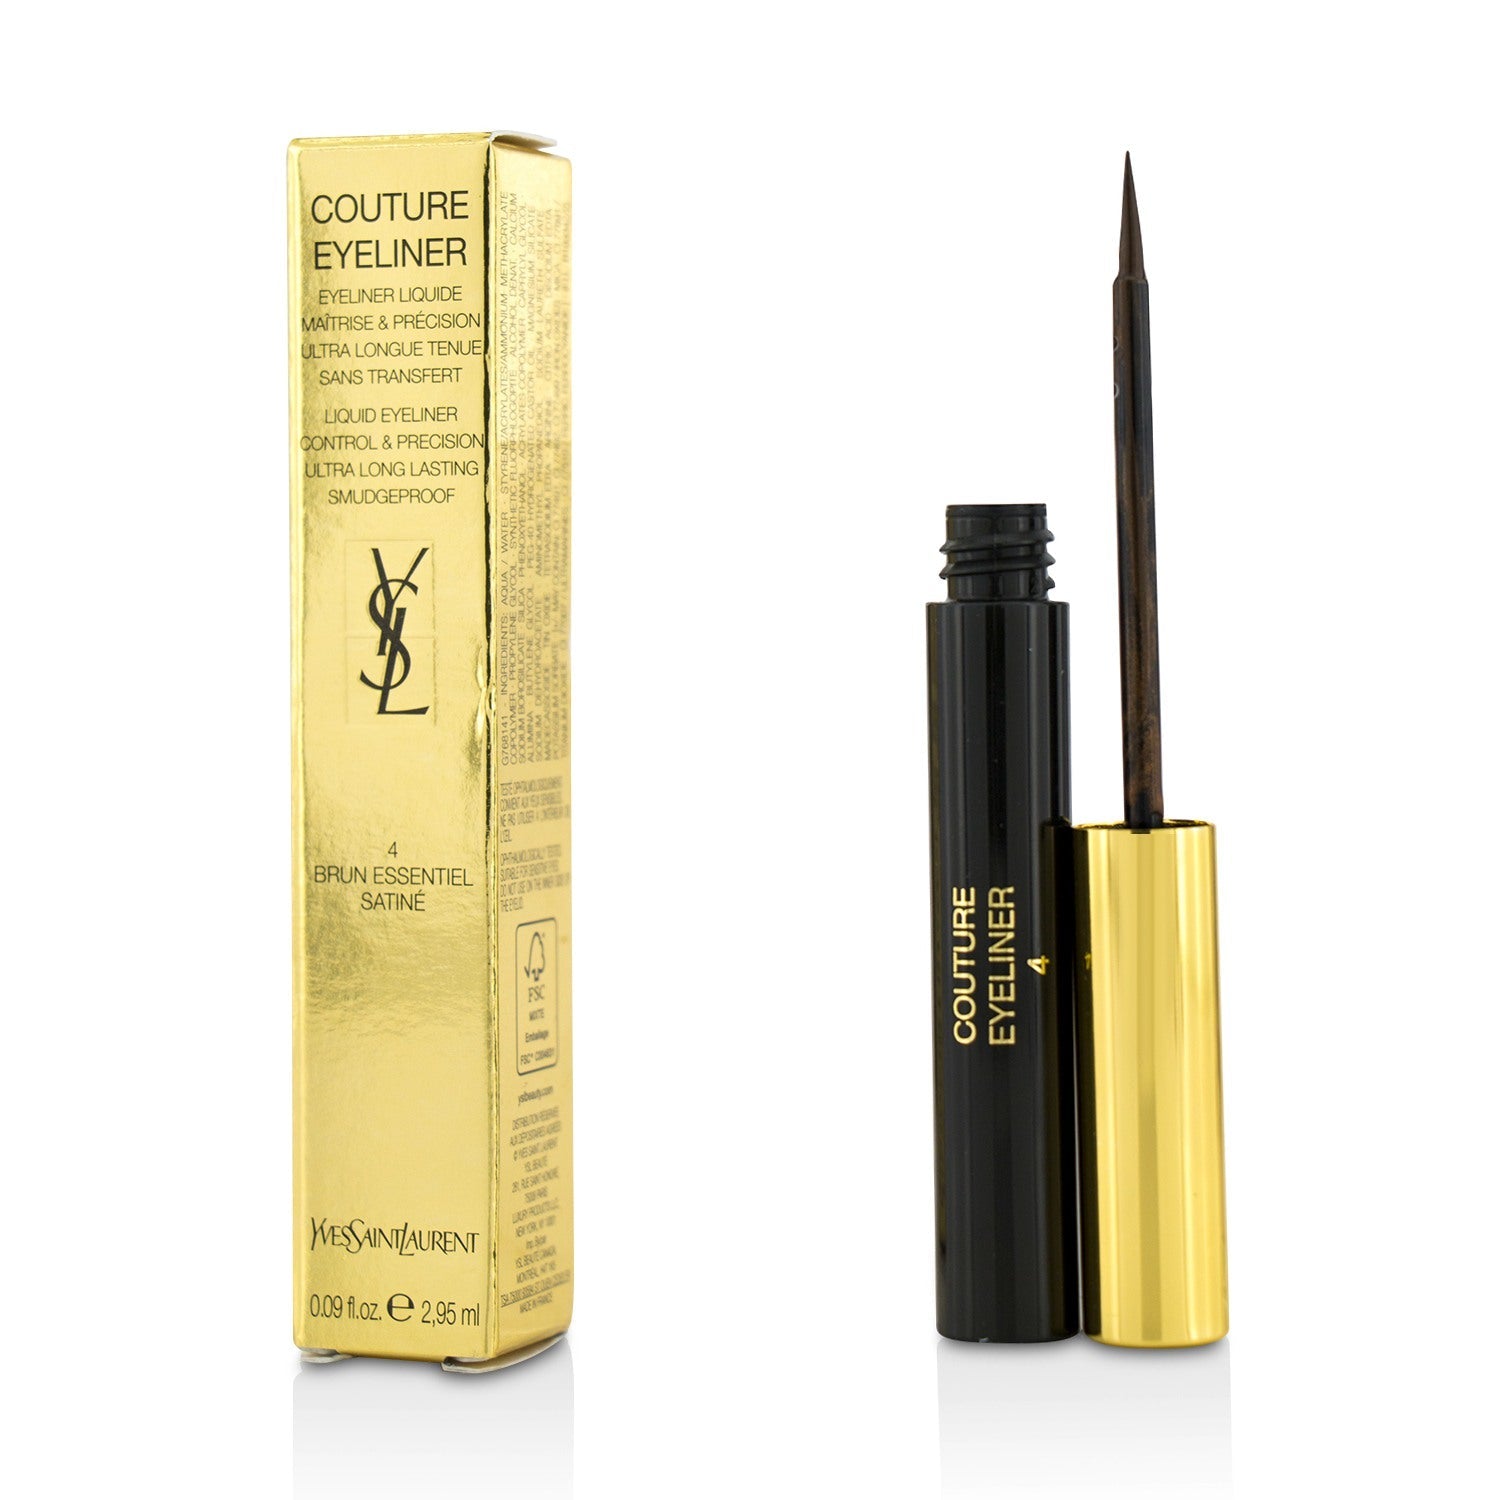 Yves saint laurent Libre Eau Parfum 50ml+Mini Eyeliner+Mini Lipstick  Golden